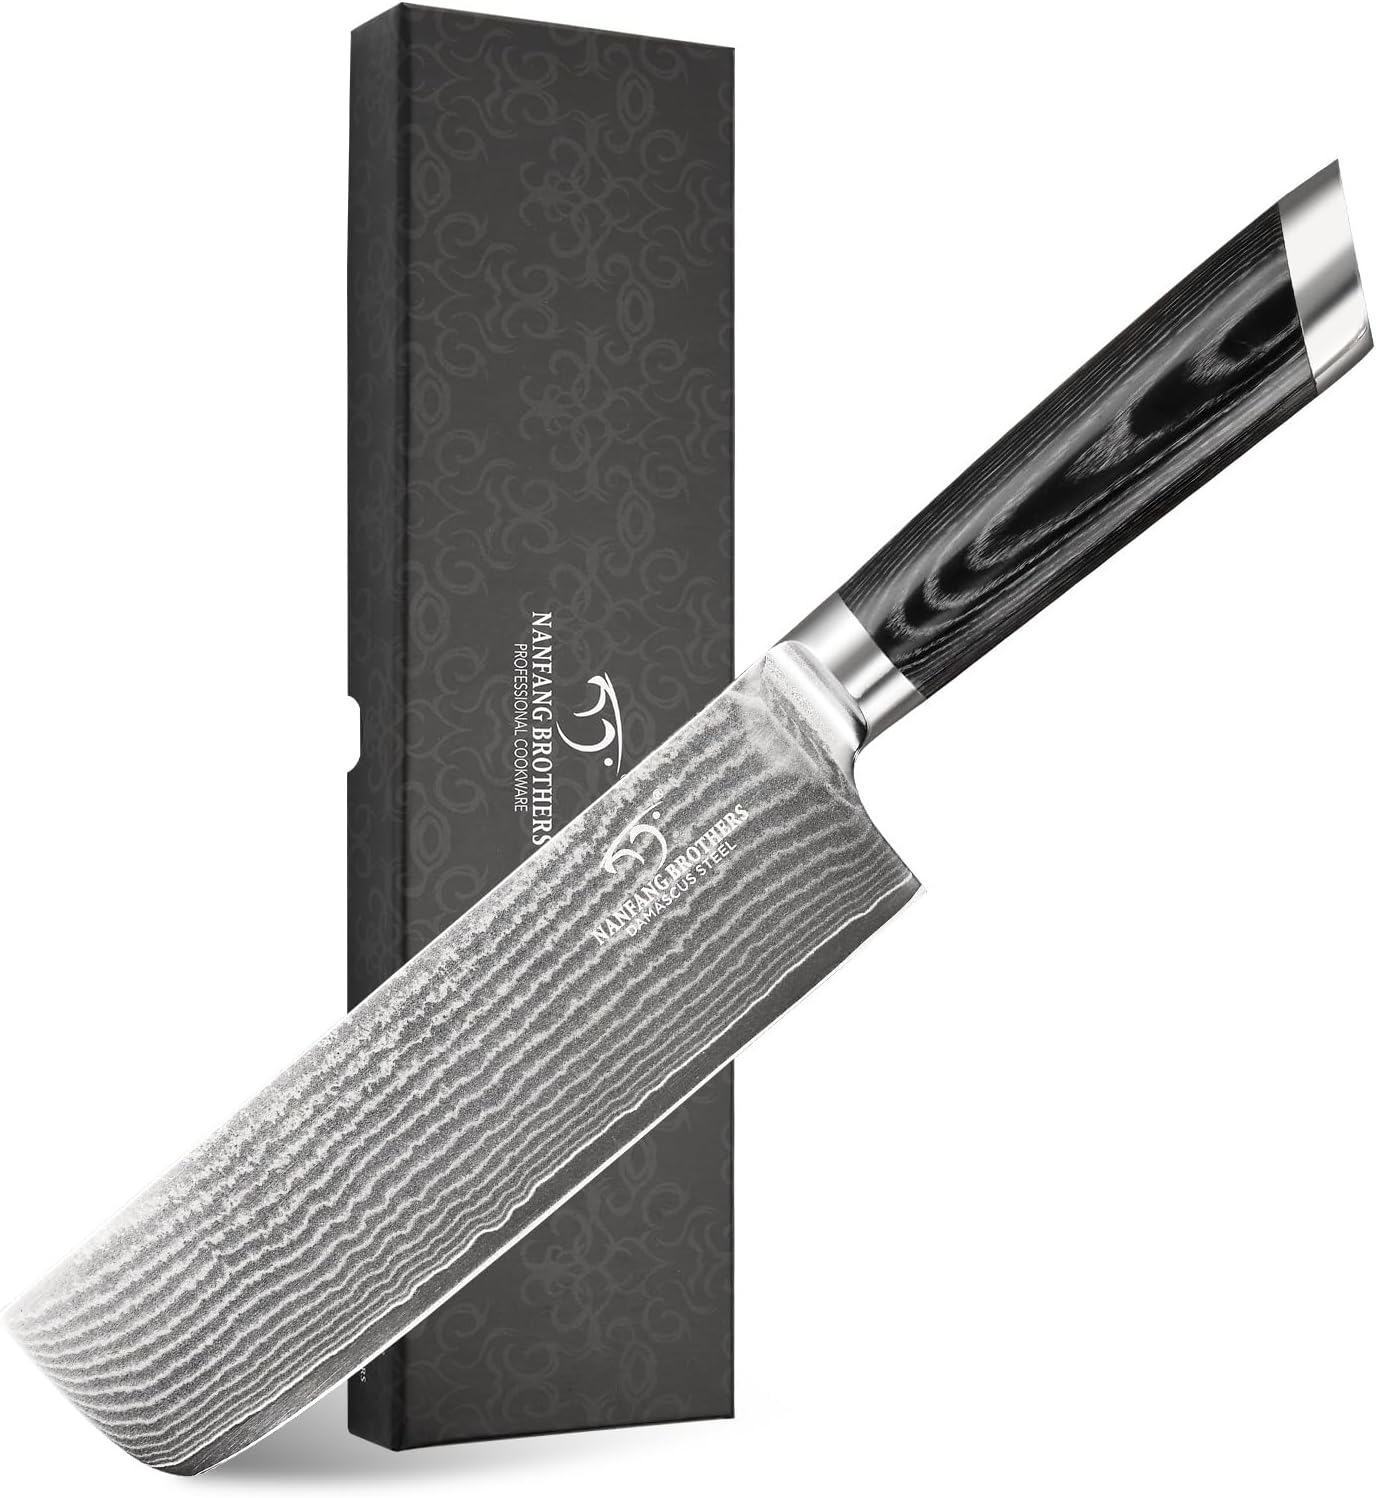 Damascus Nakiri Knife, 7 Inch Professional Kitchen Knife with Non-slip Wood Ergonomic Handle, All Purpose Chef Knife Meat Cleaver Vegetables Chopping, Razor Sharp Lightweight